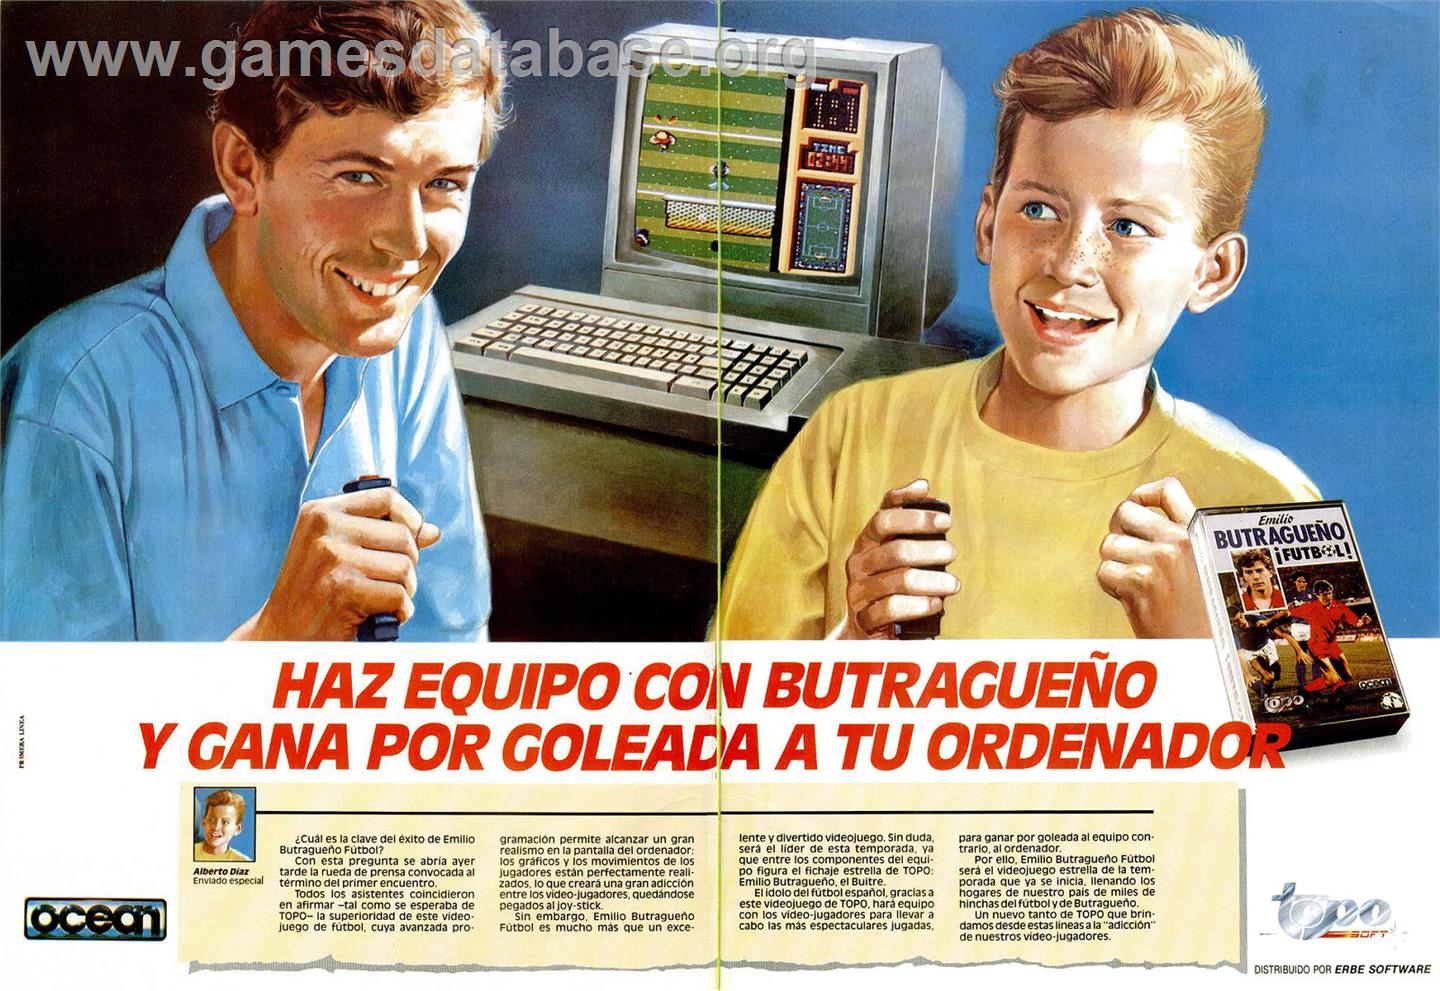 Emilio Butragueño Fútbol - Amstrad CPC - Artwork - Advert